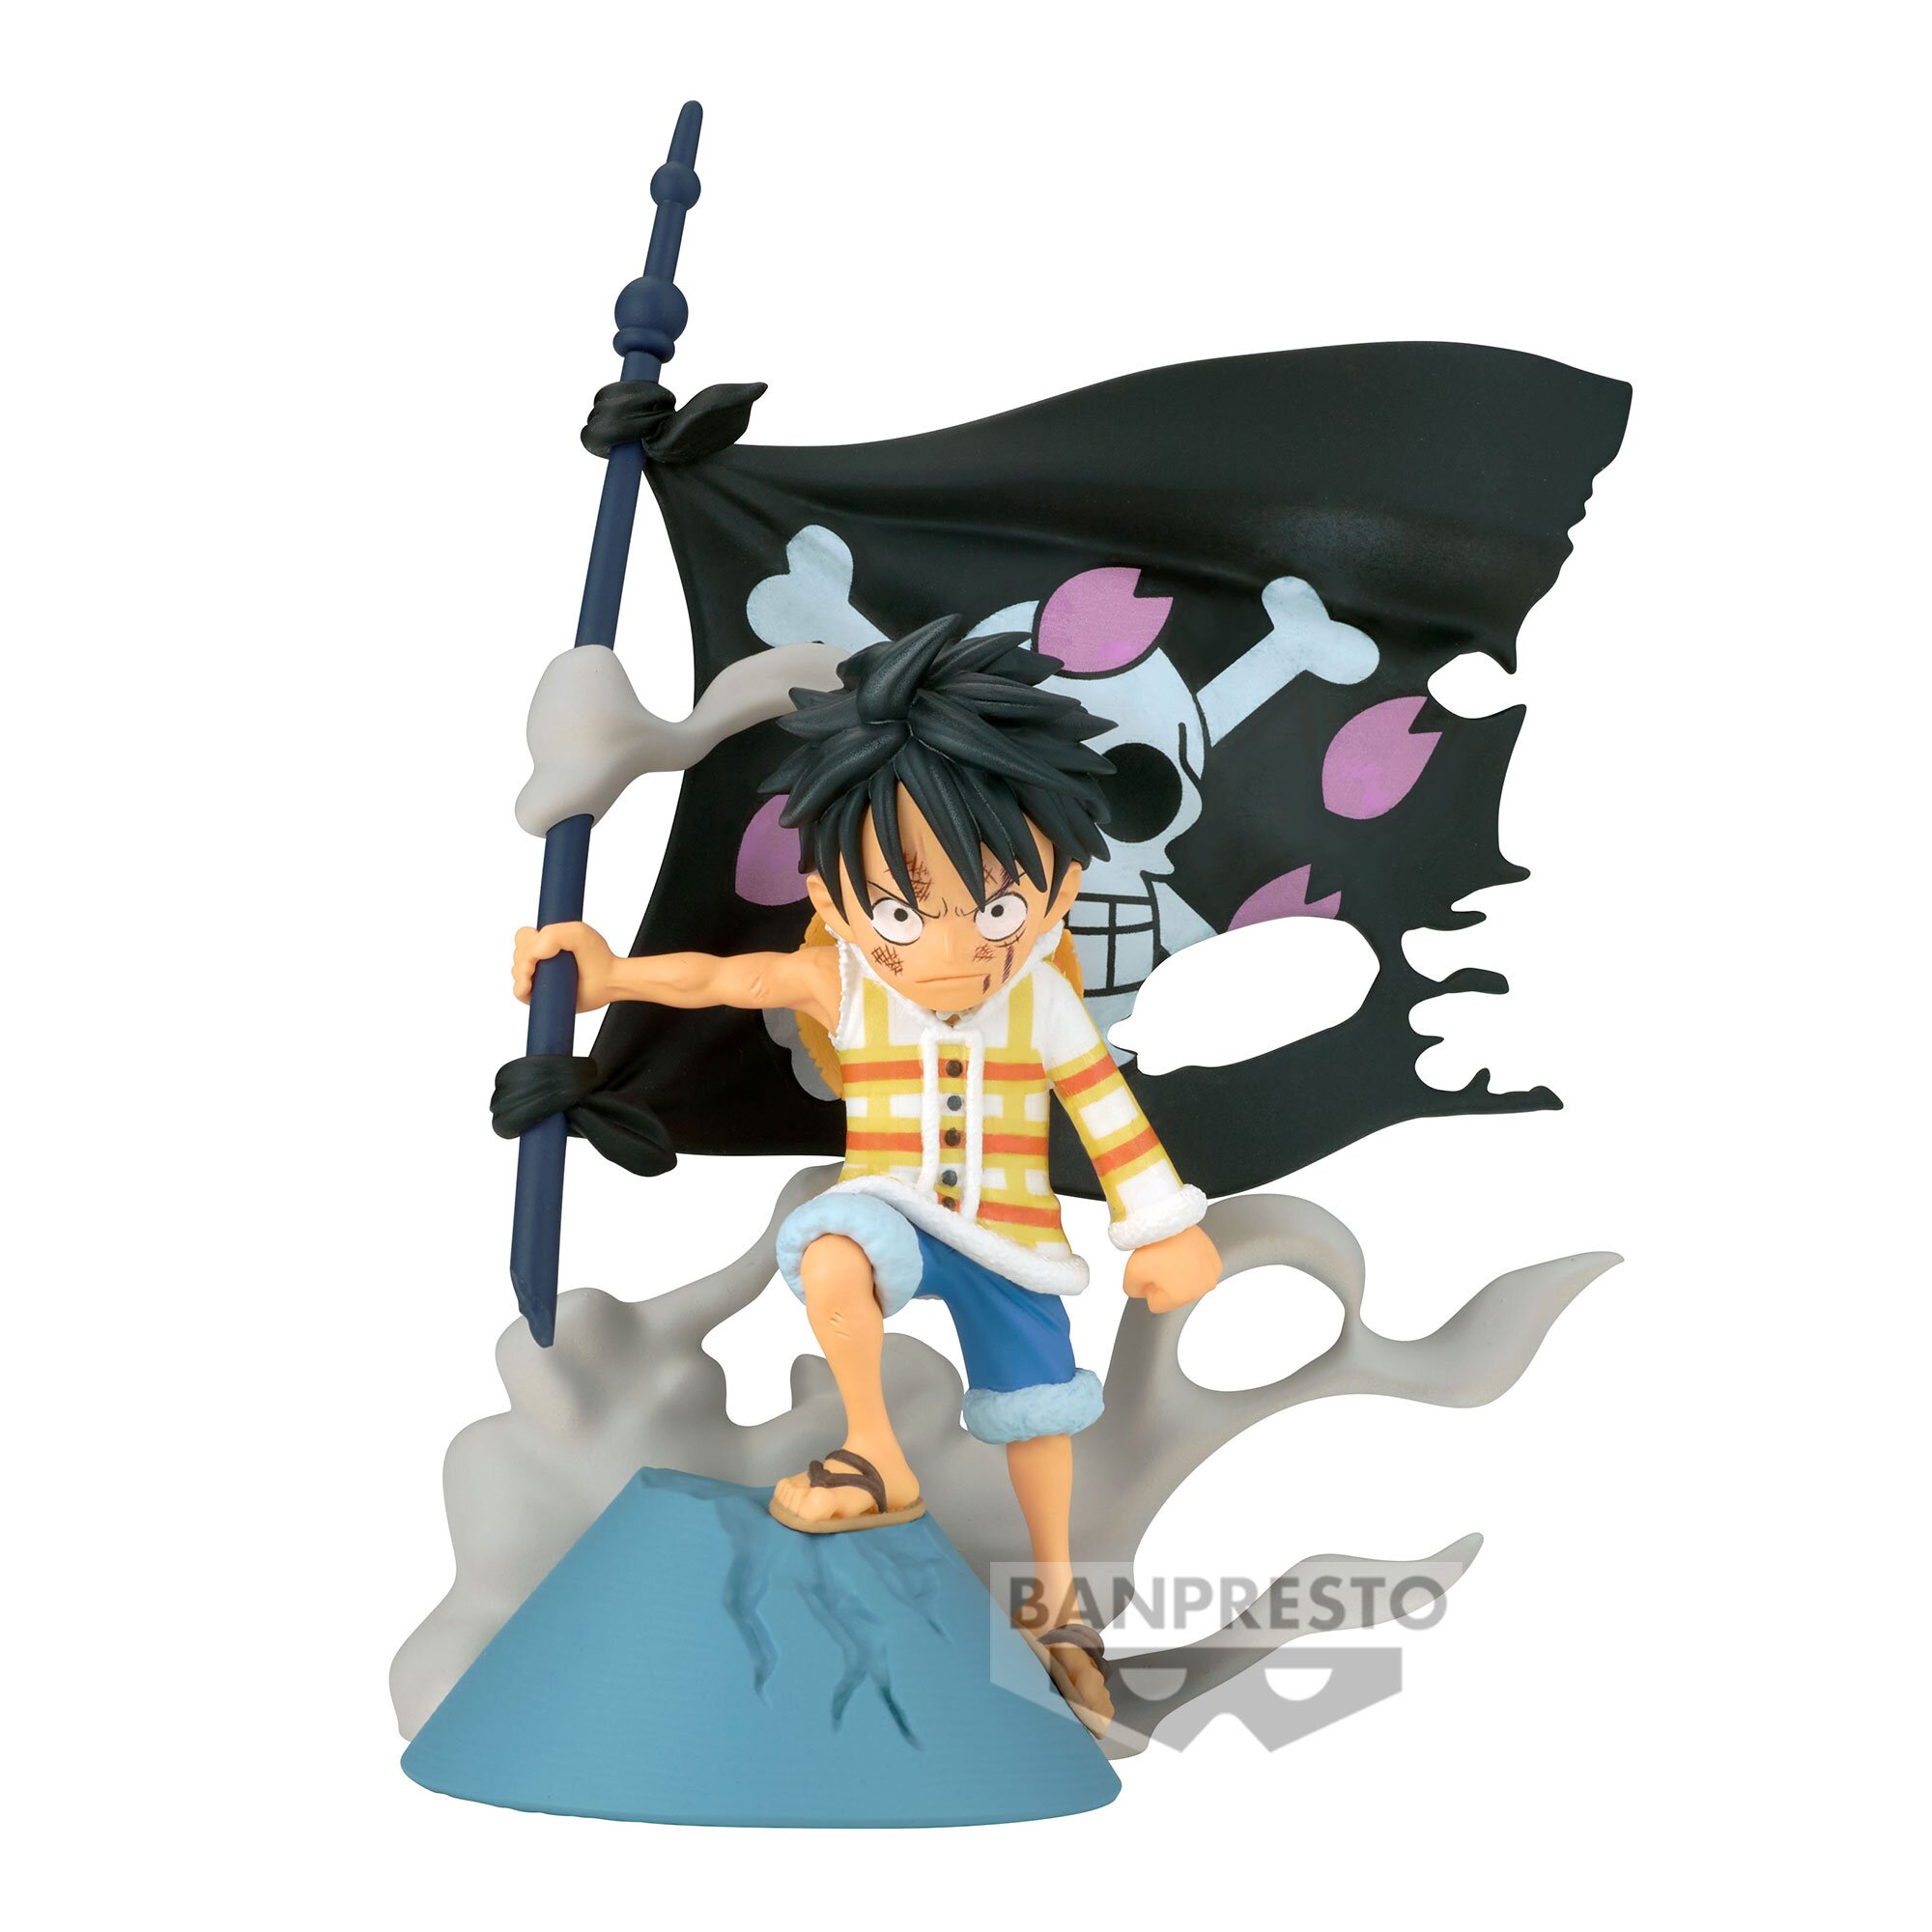 One Piece Stampede Sabo Trafalgar Law DXF Figure Doll 2 Set Banpresto Japan